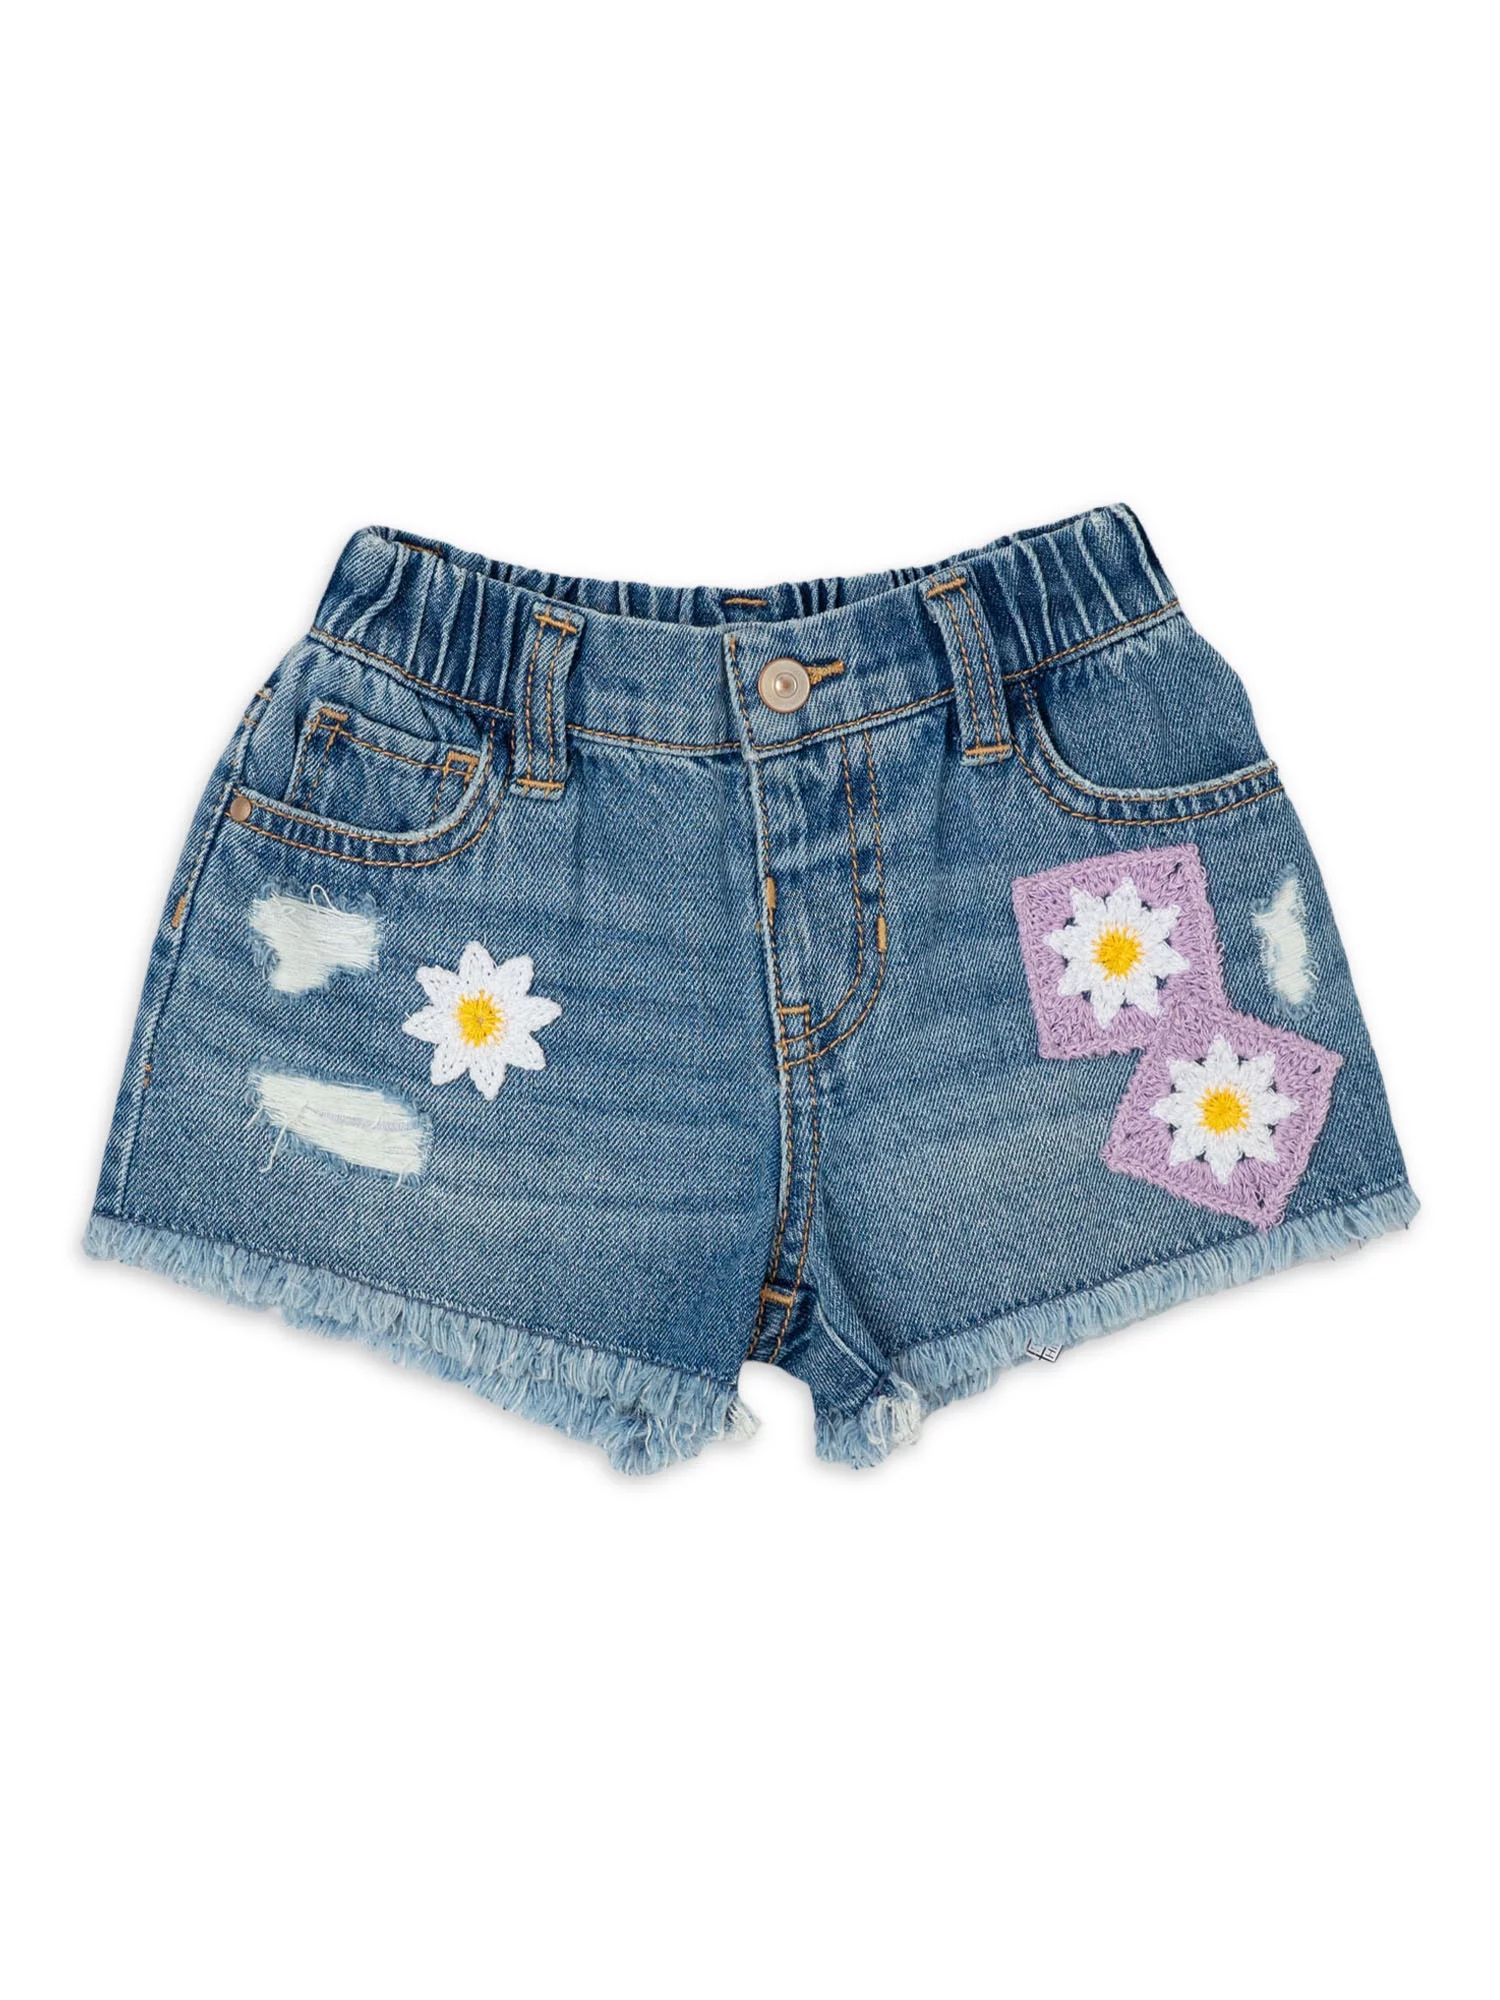 Wonder Nation Toddler Girls Crochet Denim Short, Sizes 2 Toddler-18 Months | Walmart (US)